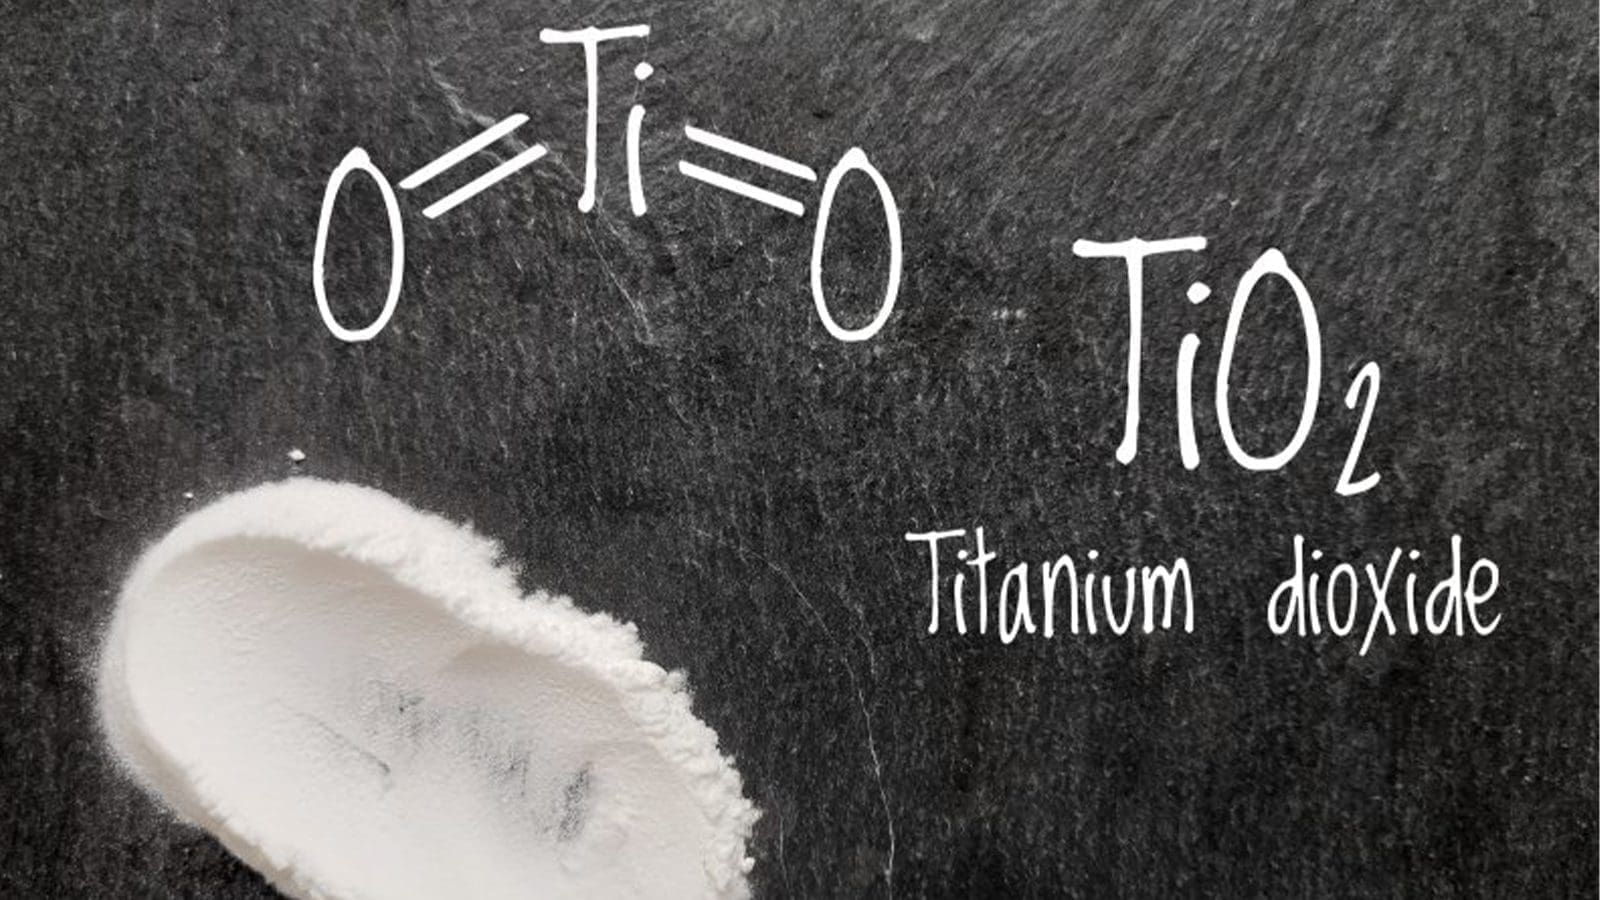 California seeks to declare titanium dioxide safe for use as food additive